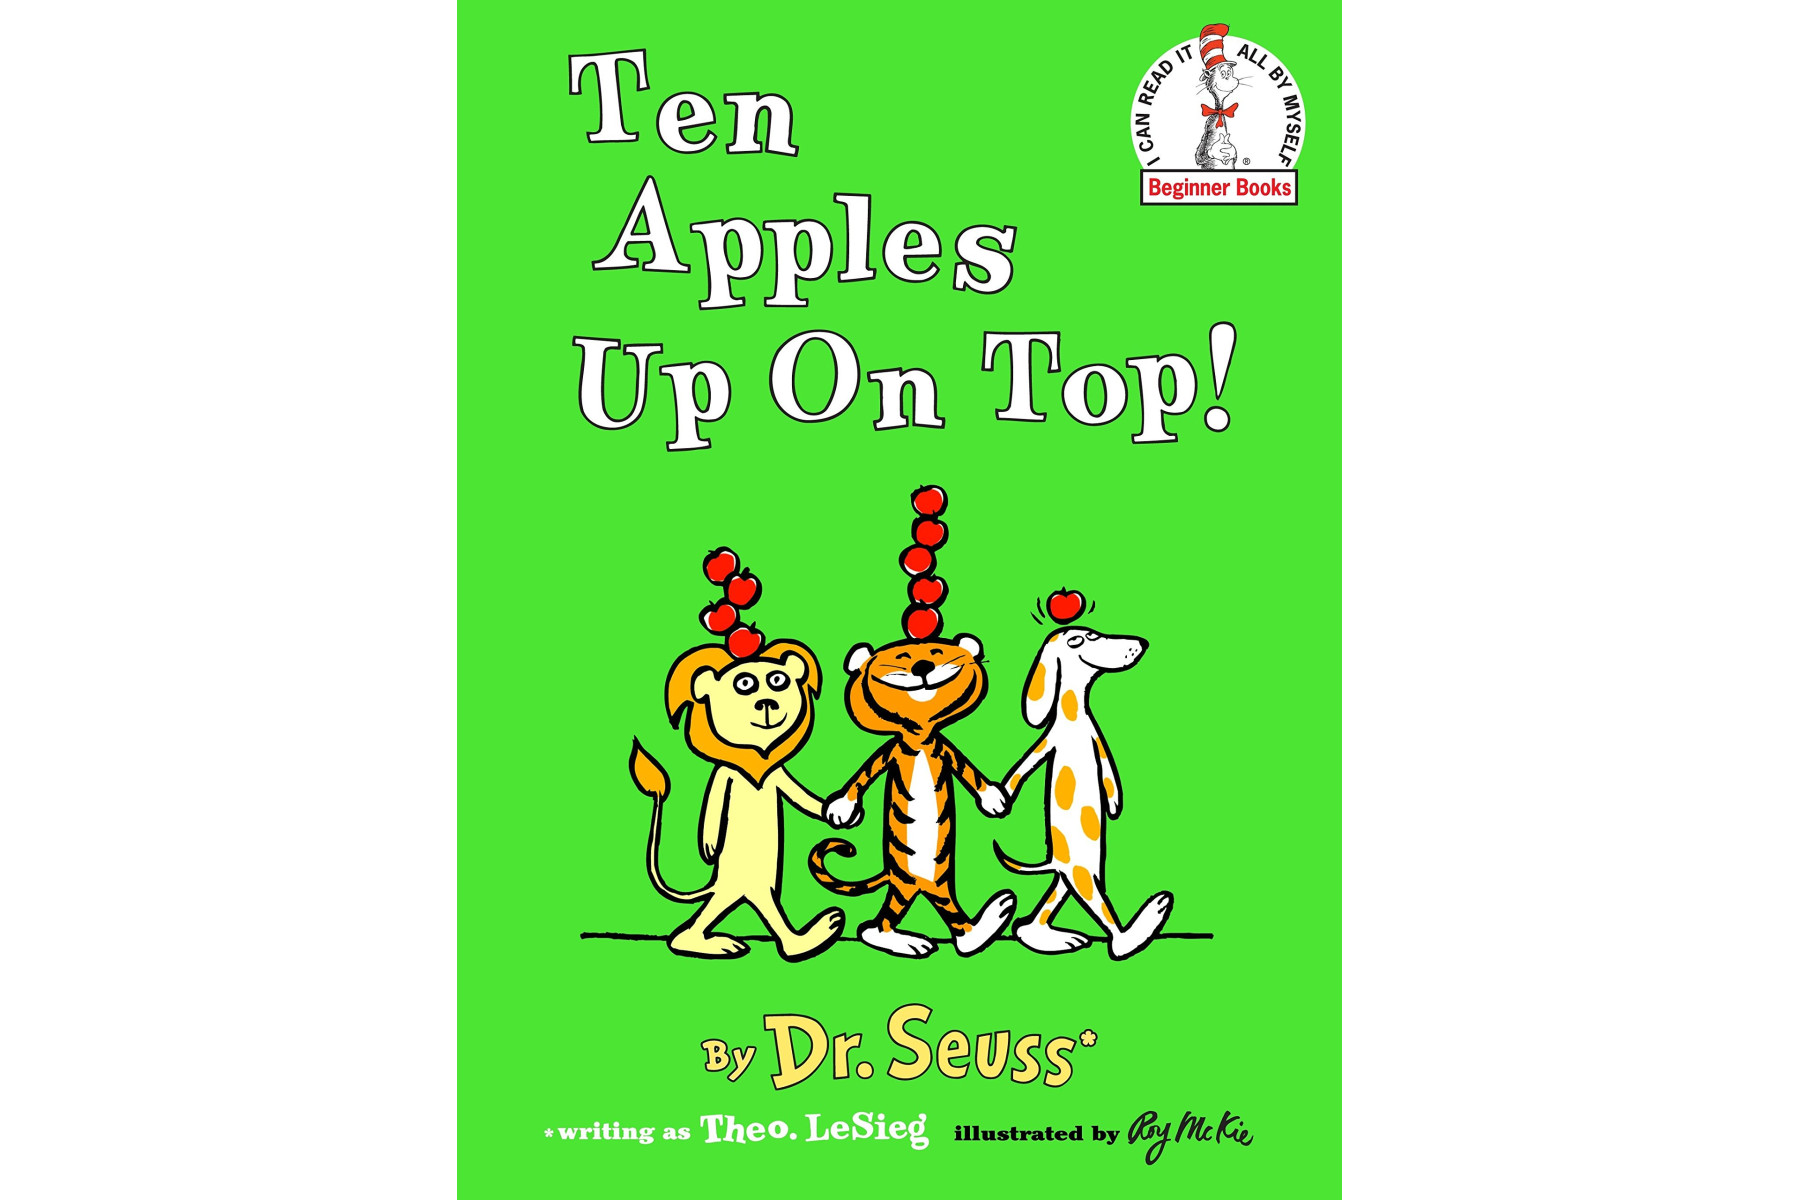 Ten Apples Up on Top! (Beginner Books(r)